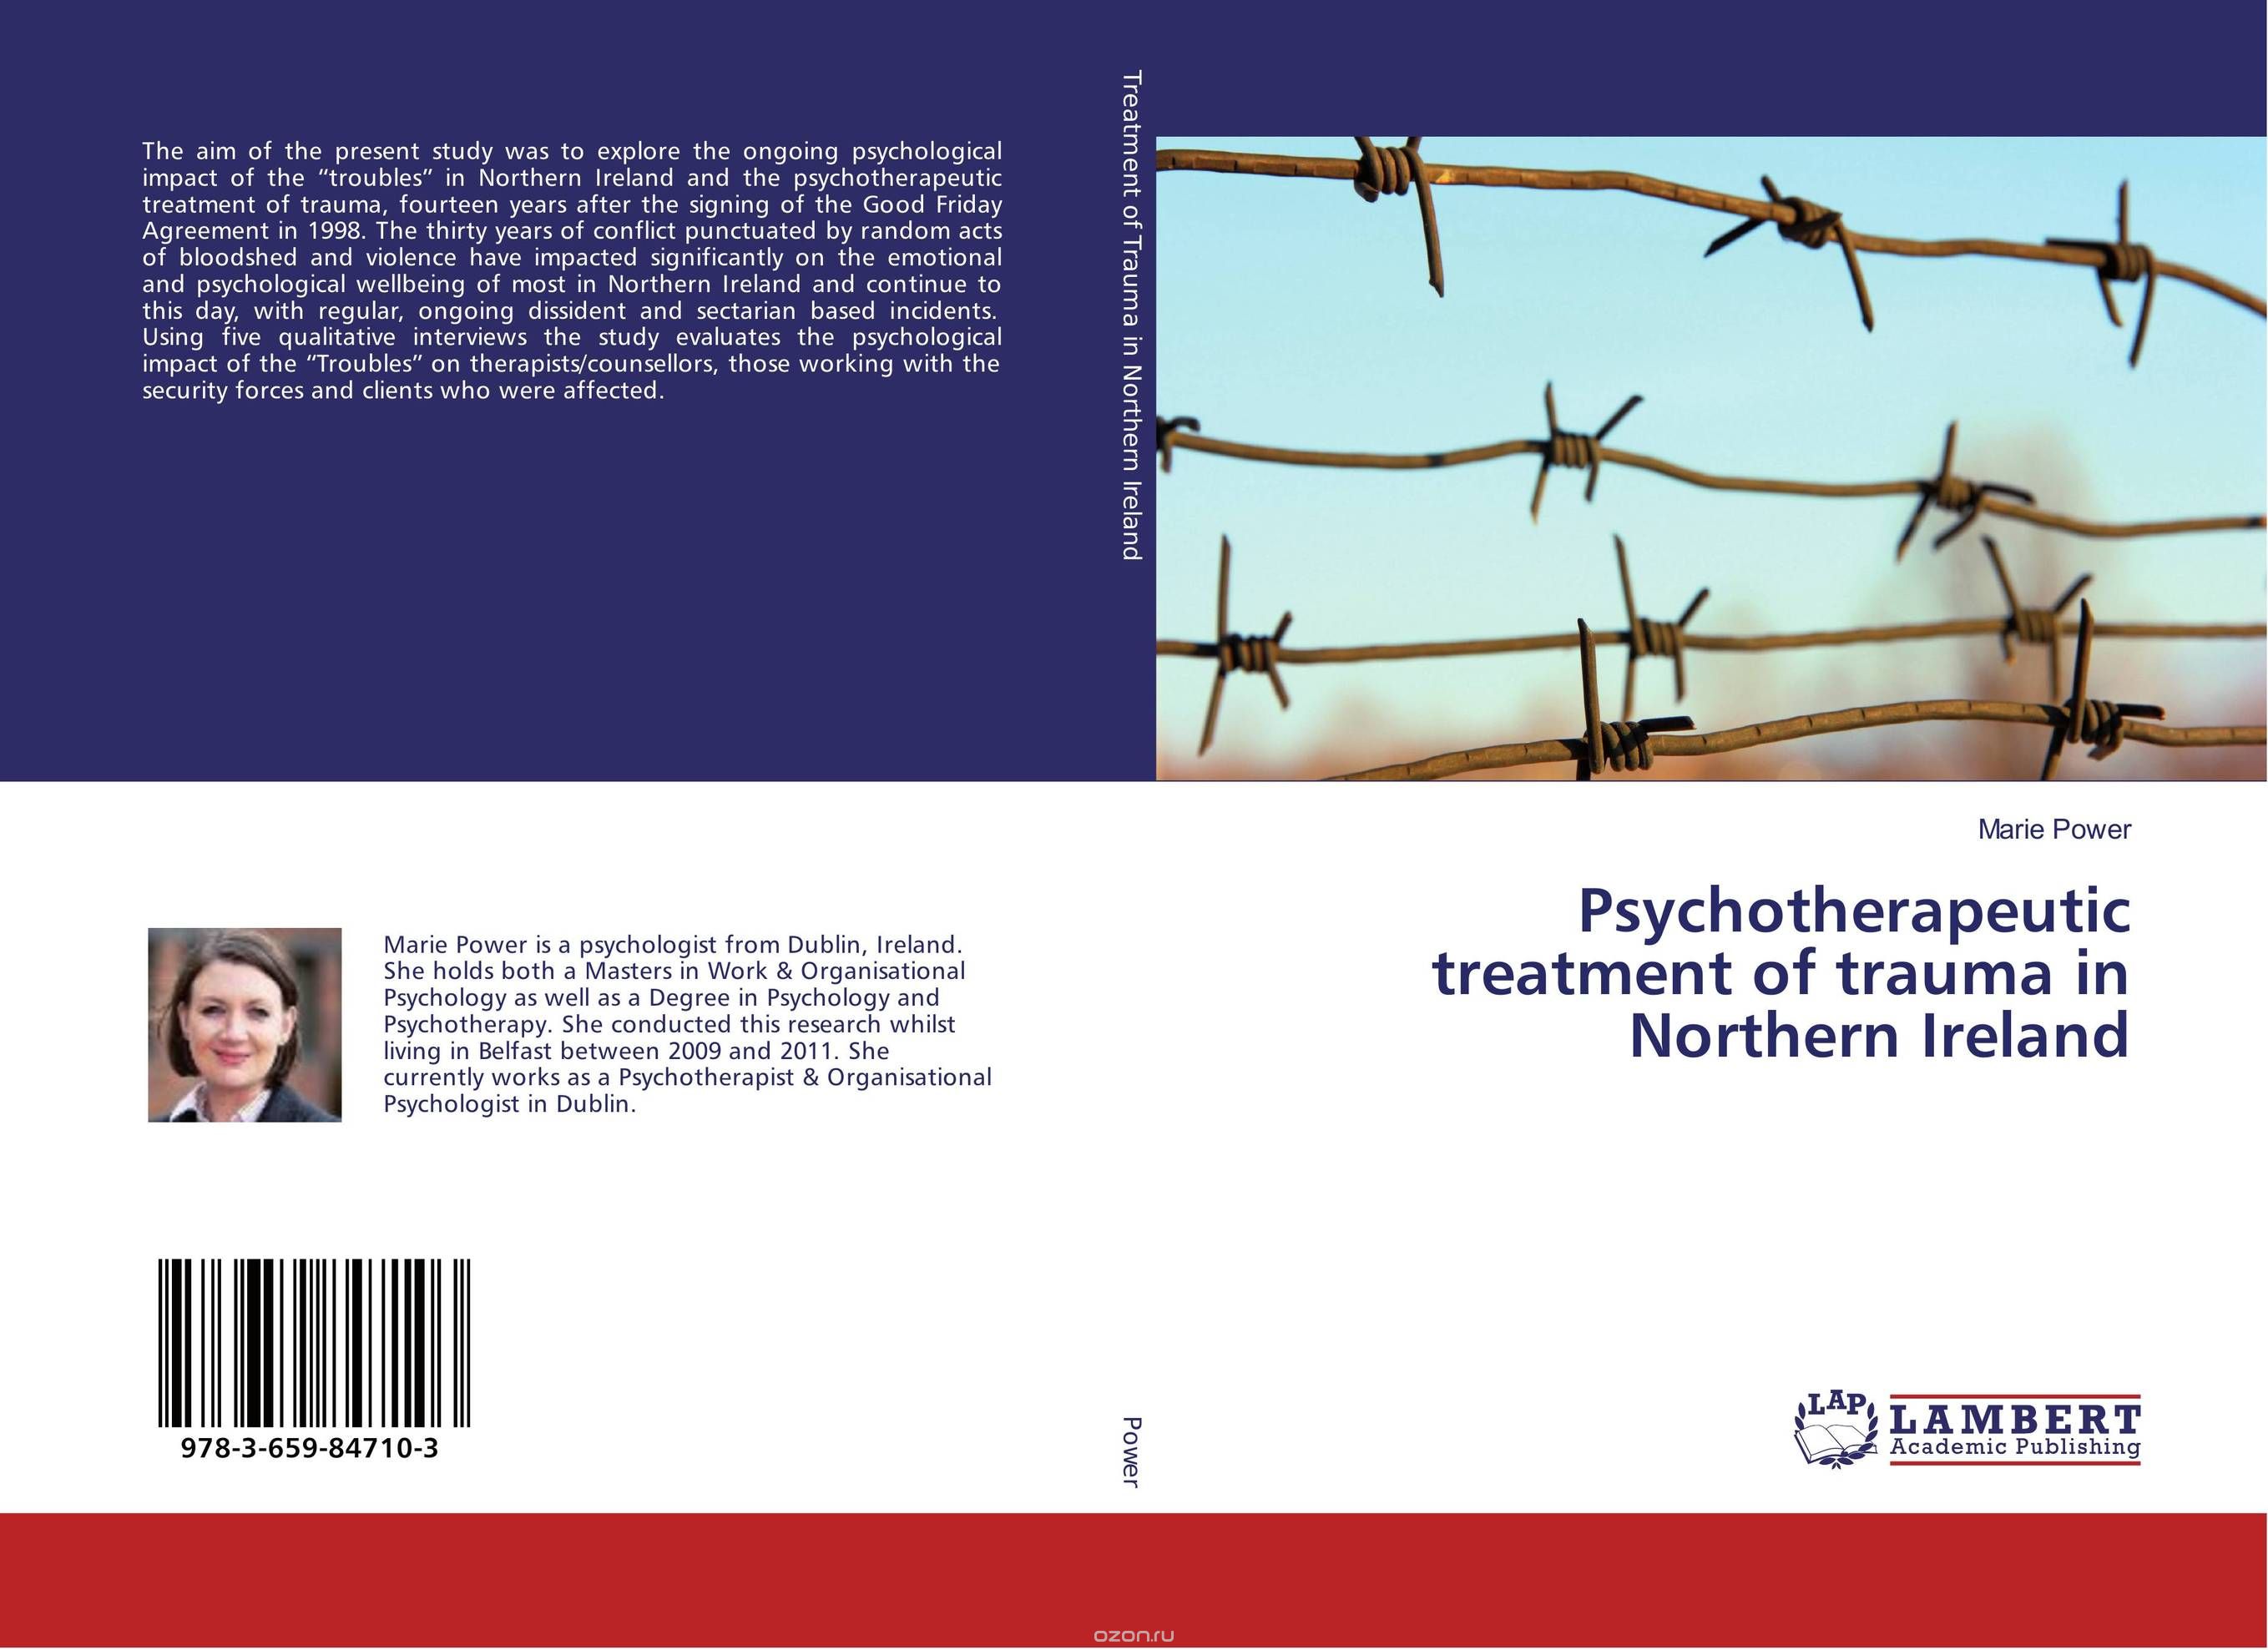 Скачать книгу "Psychotherapeutic treatment of trauma in Northern Ireland"